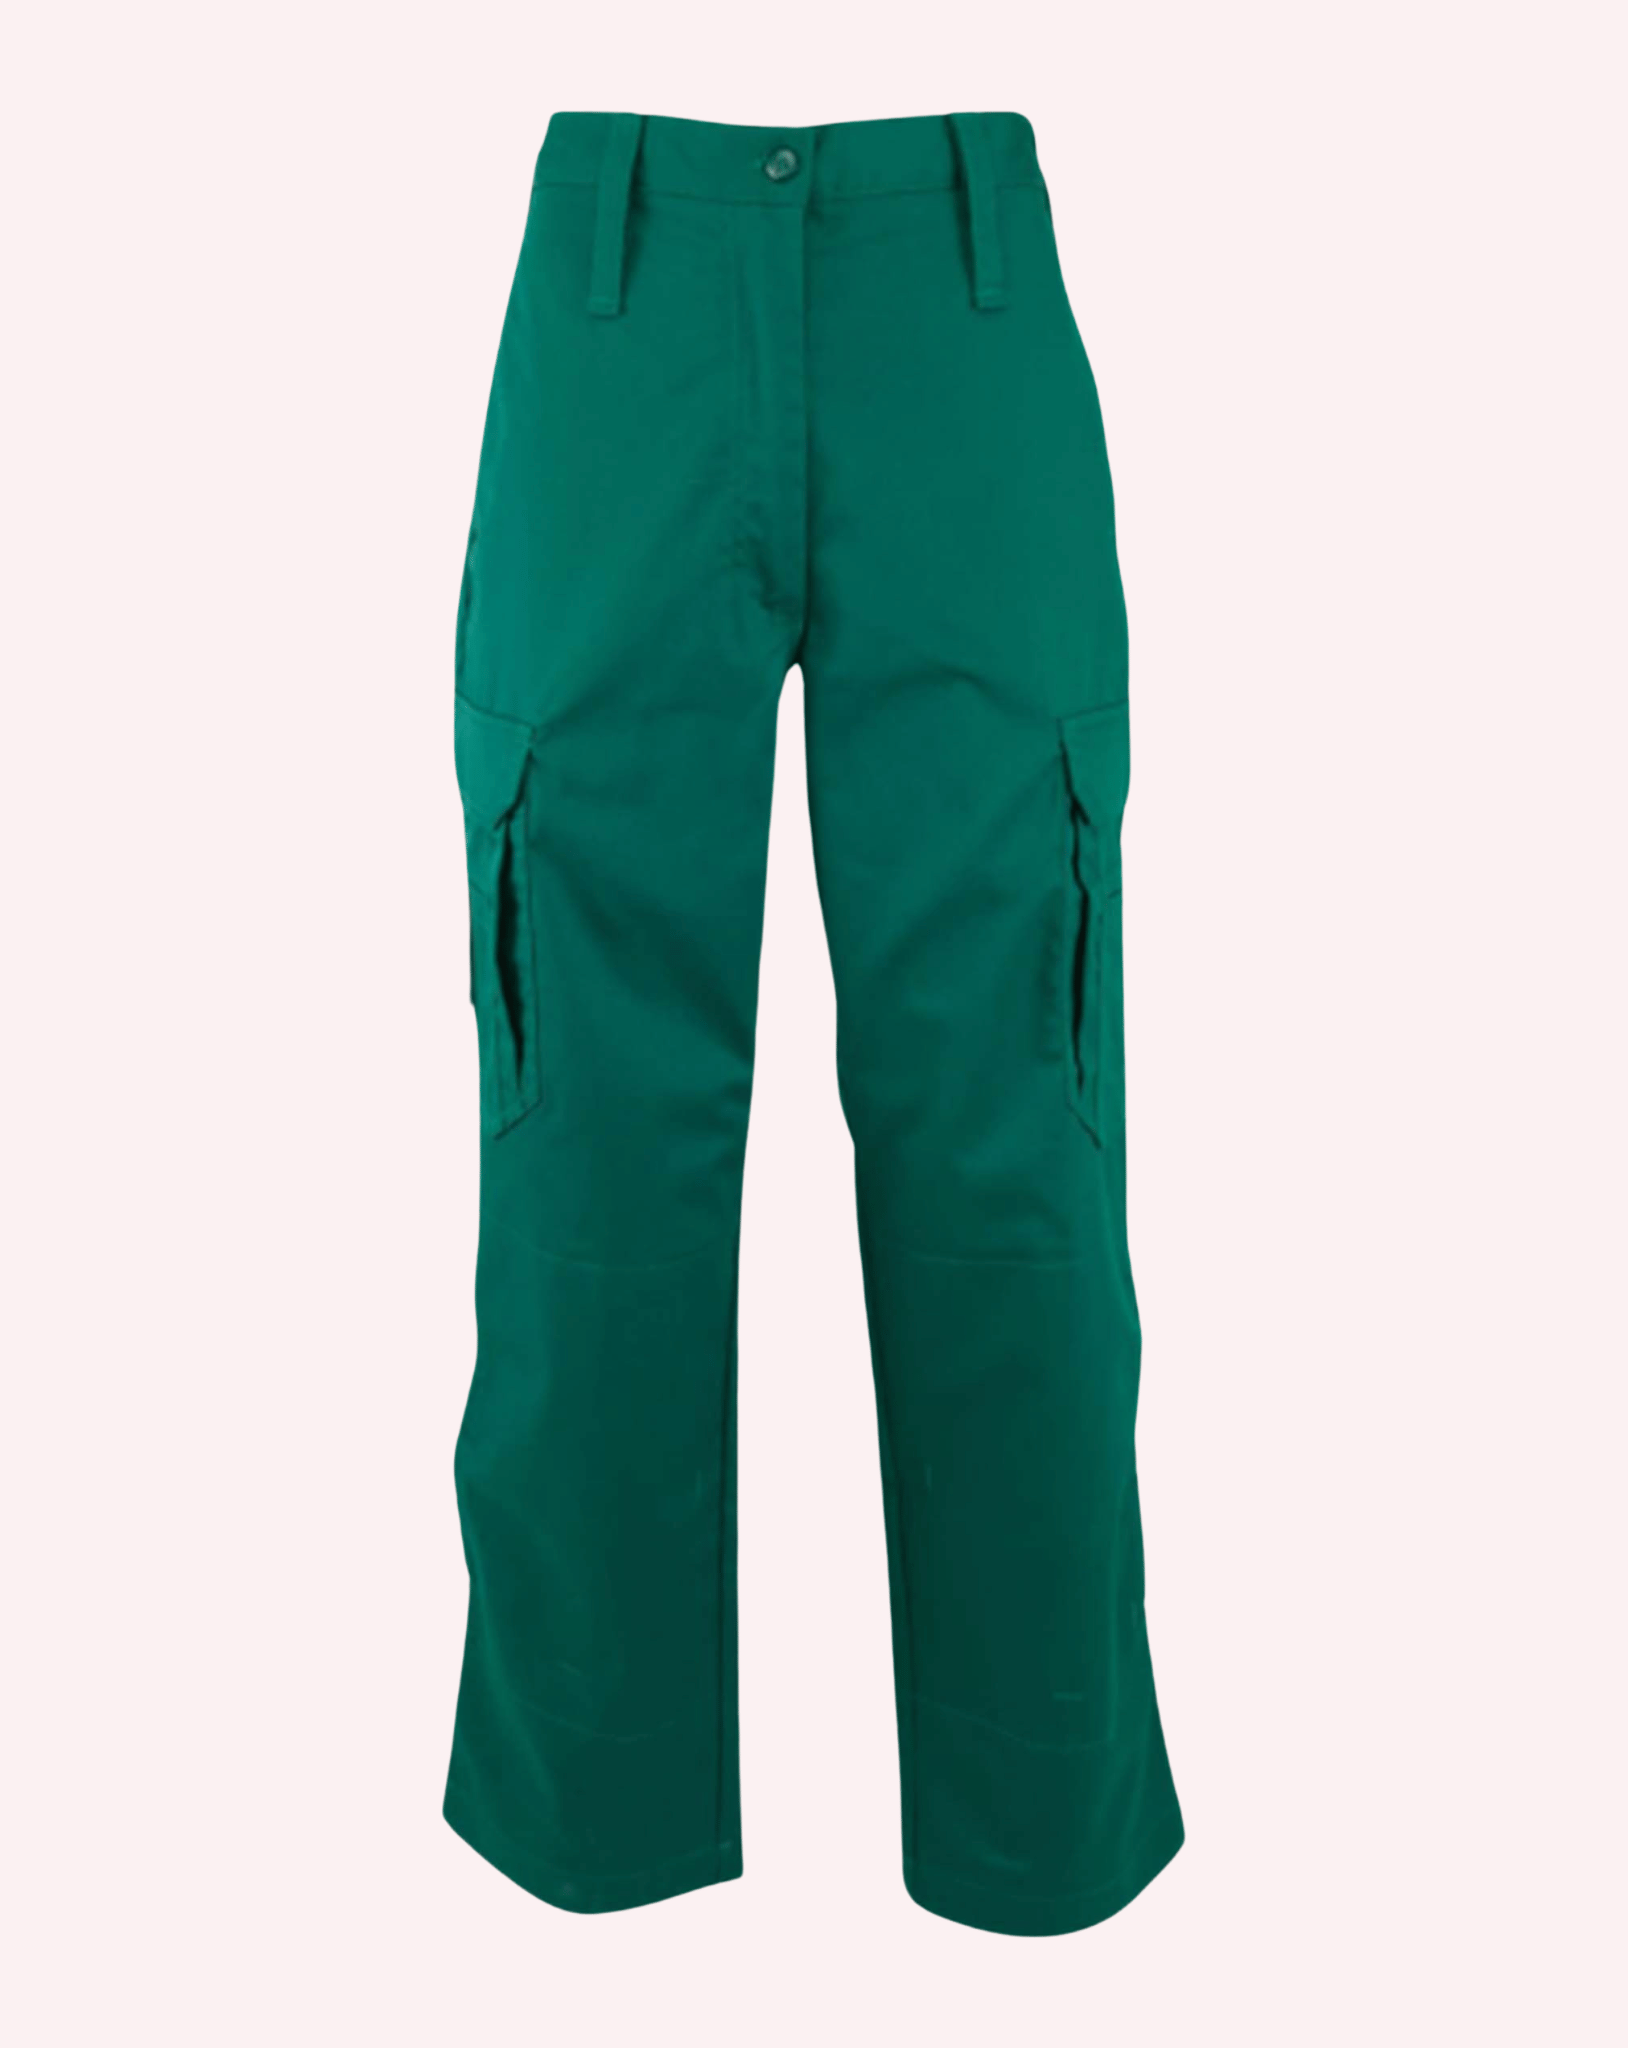 EMS Medic Green Trousers Lightweight Ripstop - Paramedic/Ambulance/Niton999  | eBay